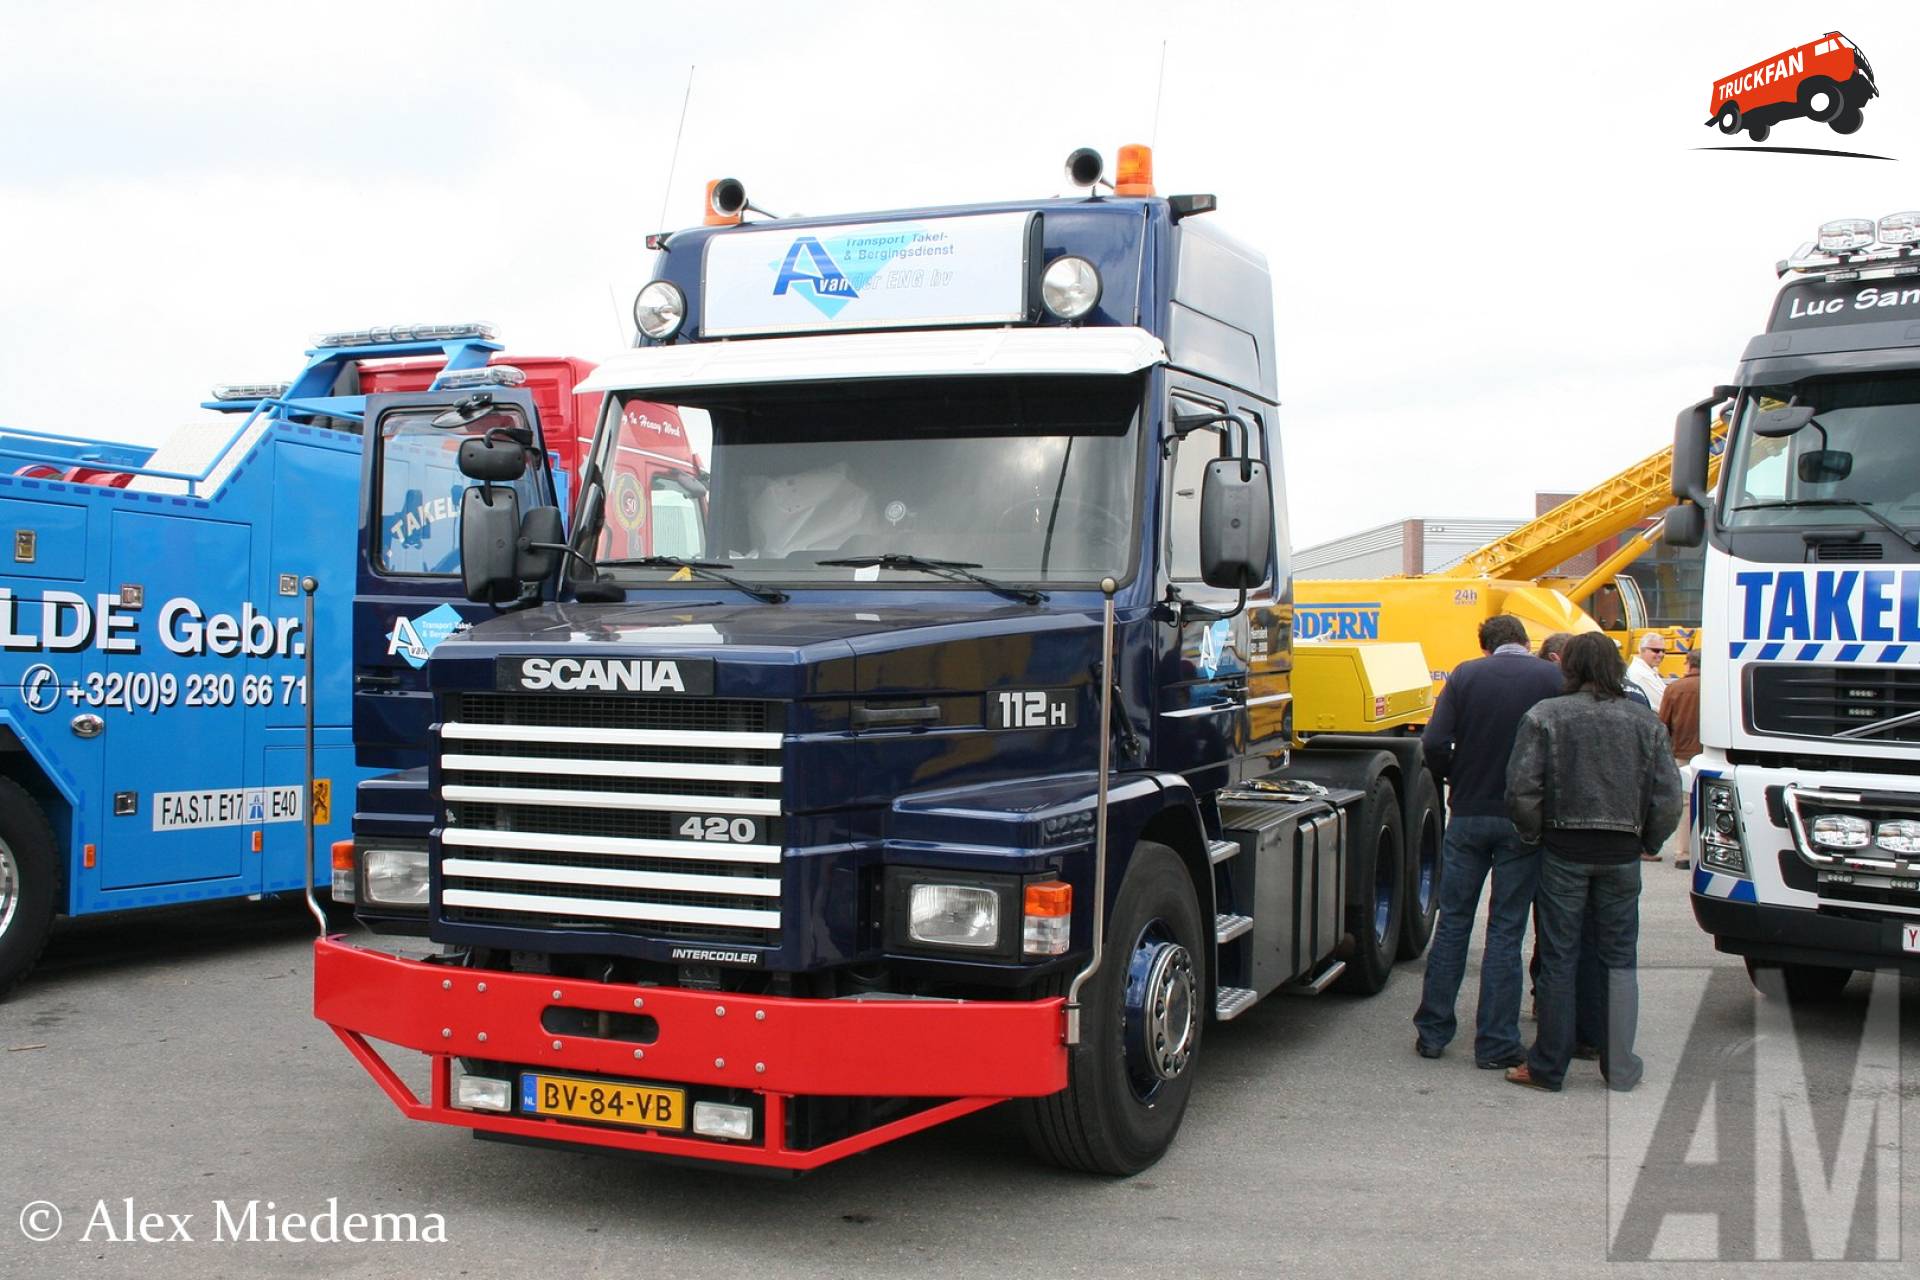 Scania T112